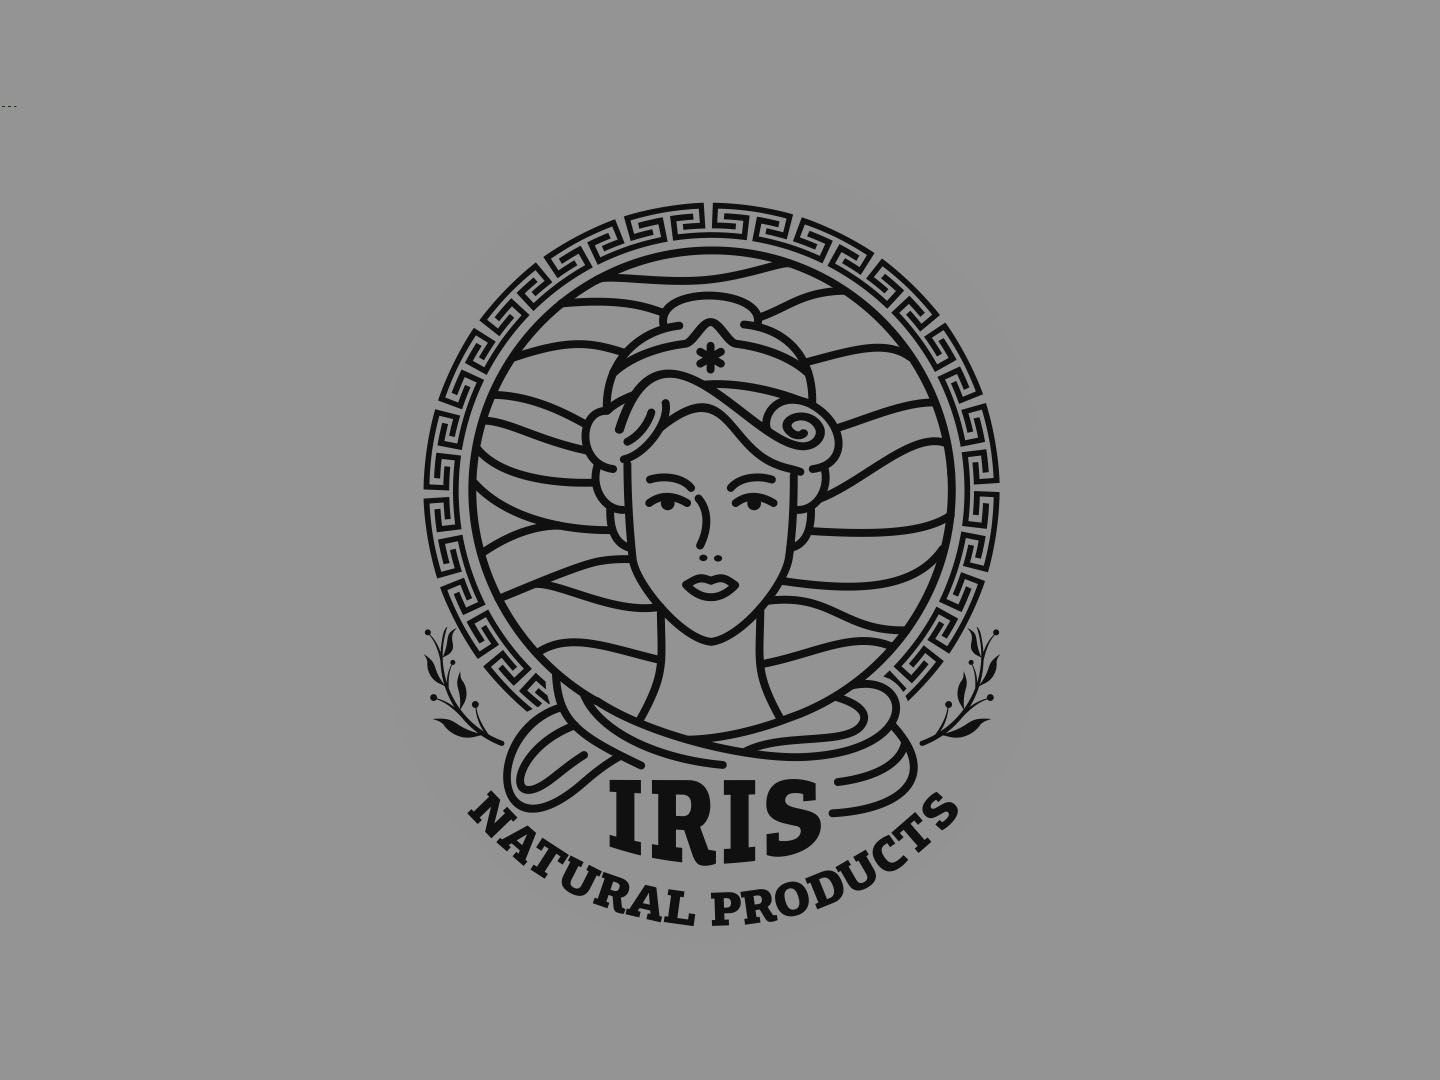 IRIS NATURAL PRODUCTS